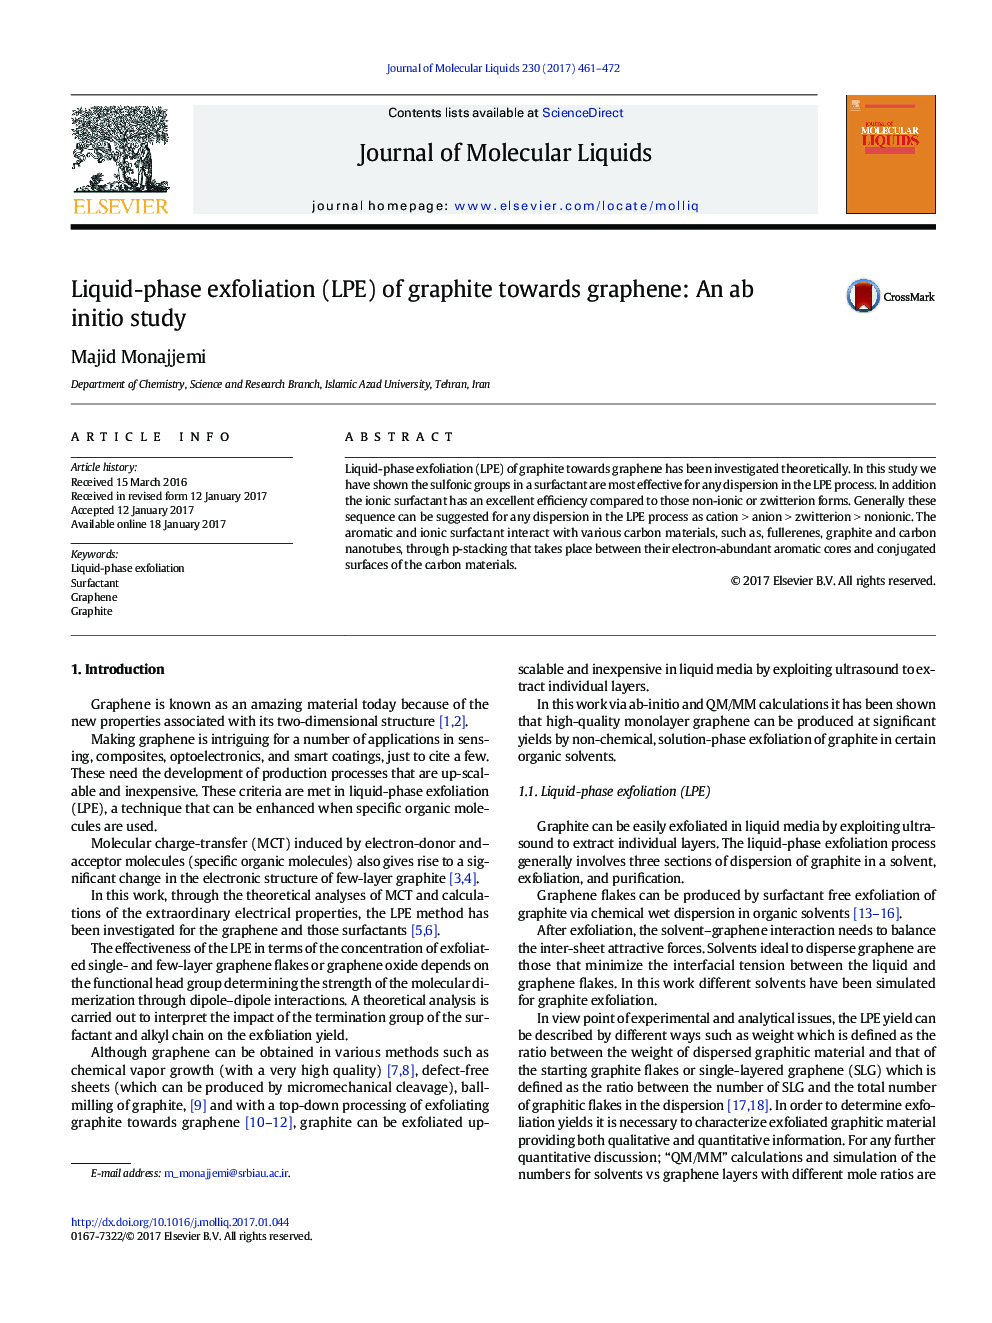 Liquid-phase exfoliation (LPE) of graphite towards graphene: An ab initio study